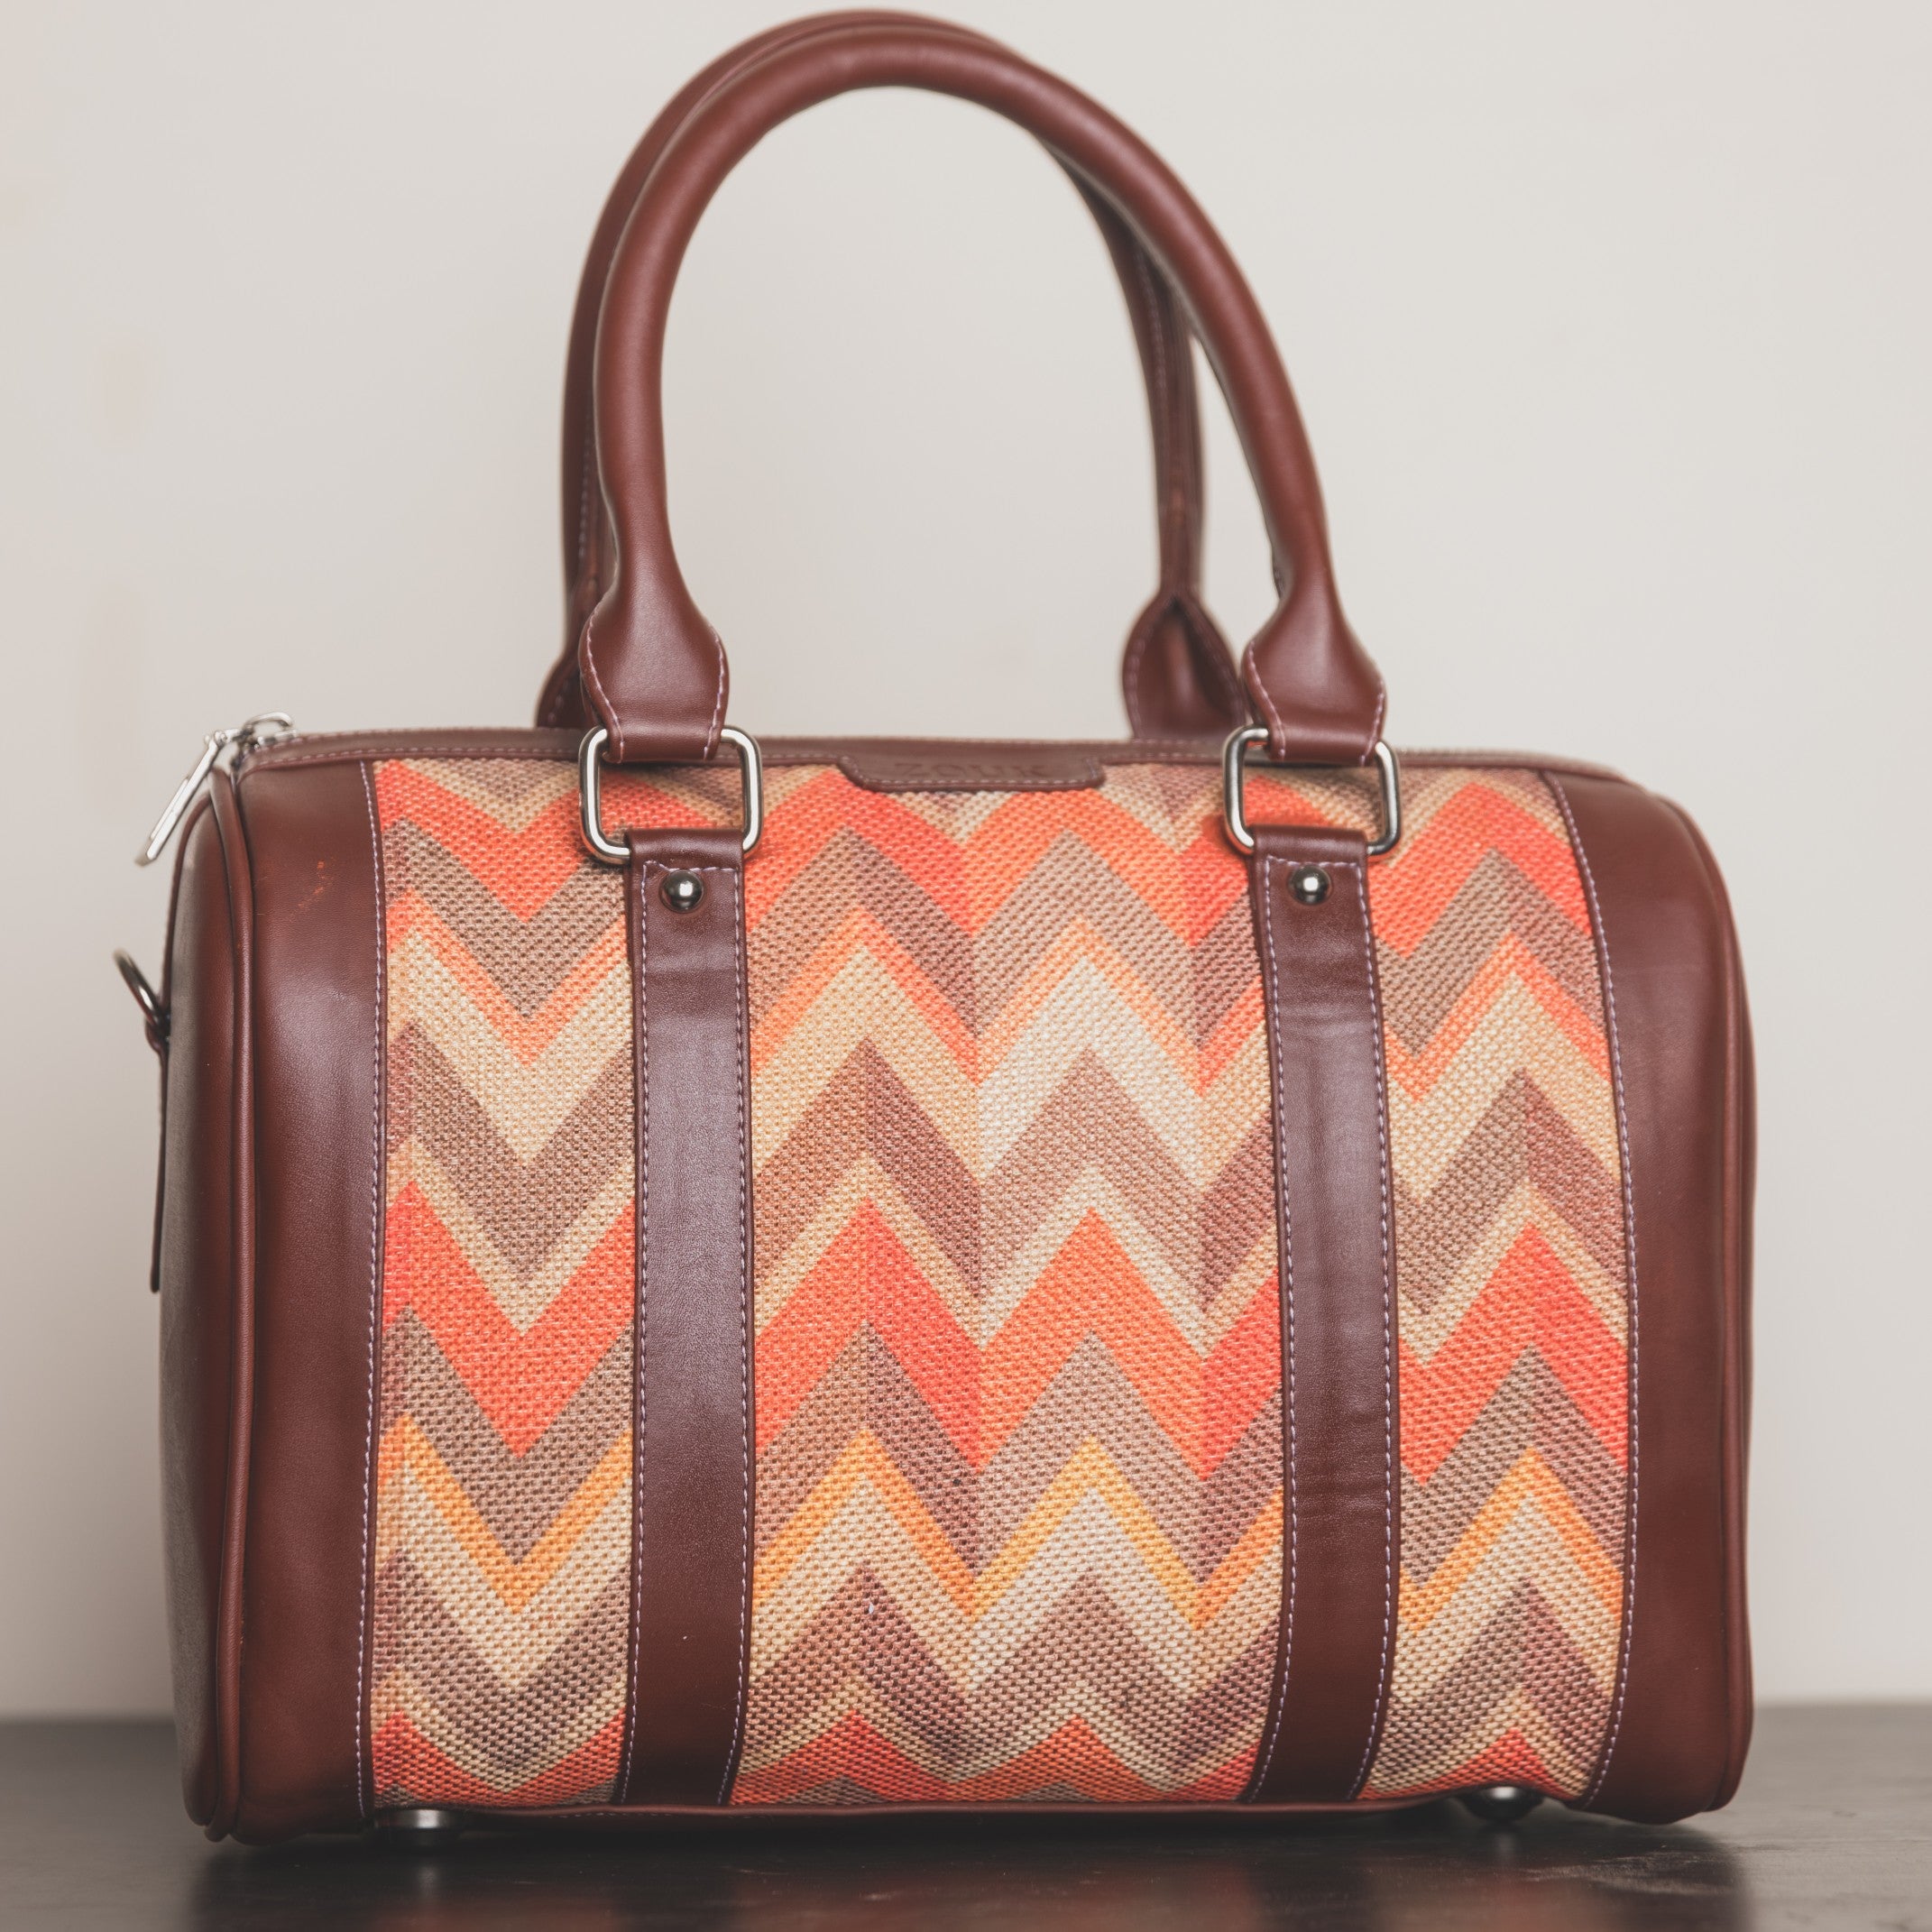 Buy MIXEN Women Satchel Purses Handbags Barrel Bags Top handle Work Tote  with Long Shoulder Strap, Random Colors at Amazon.in